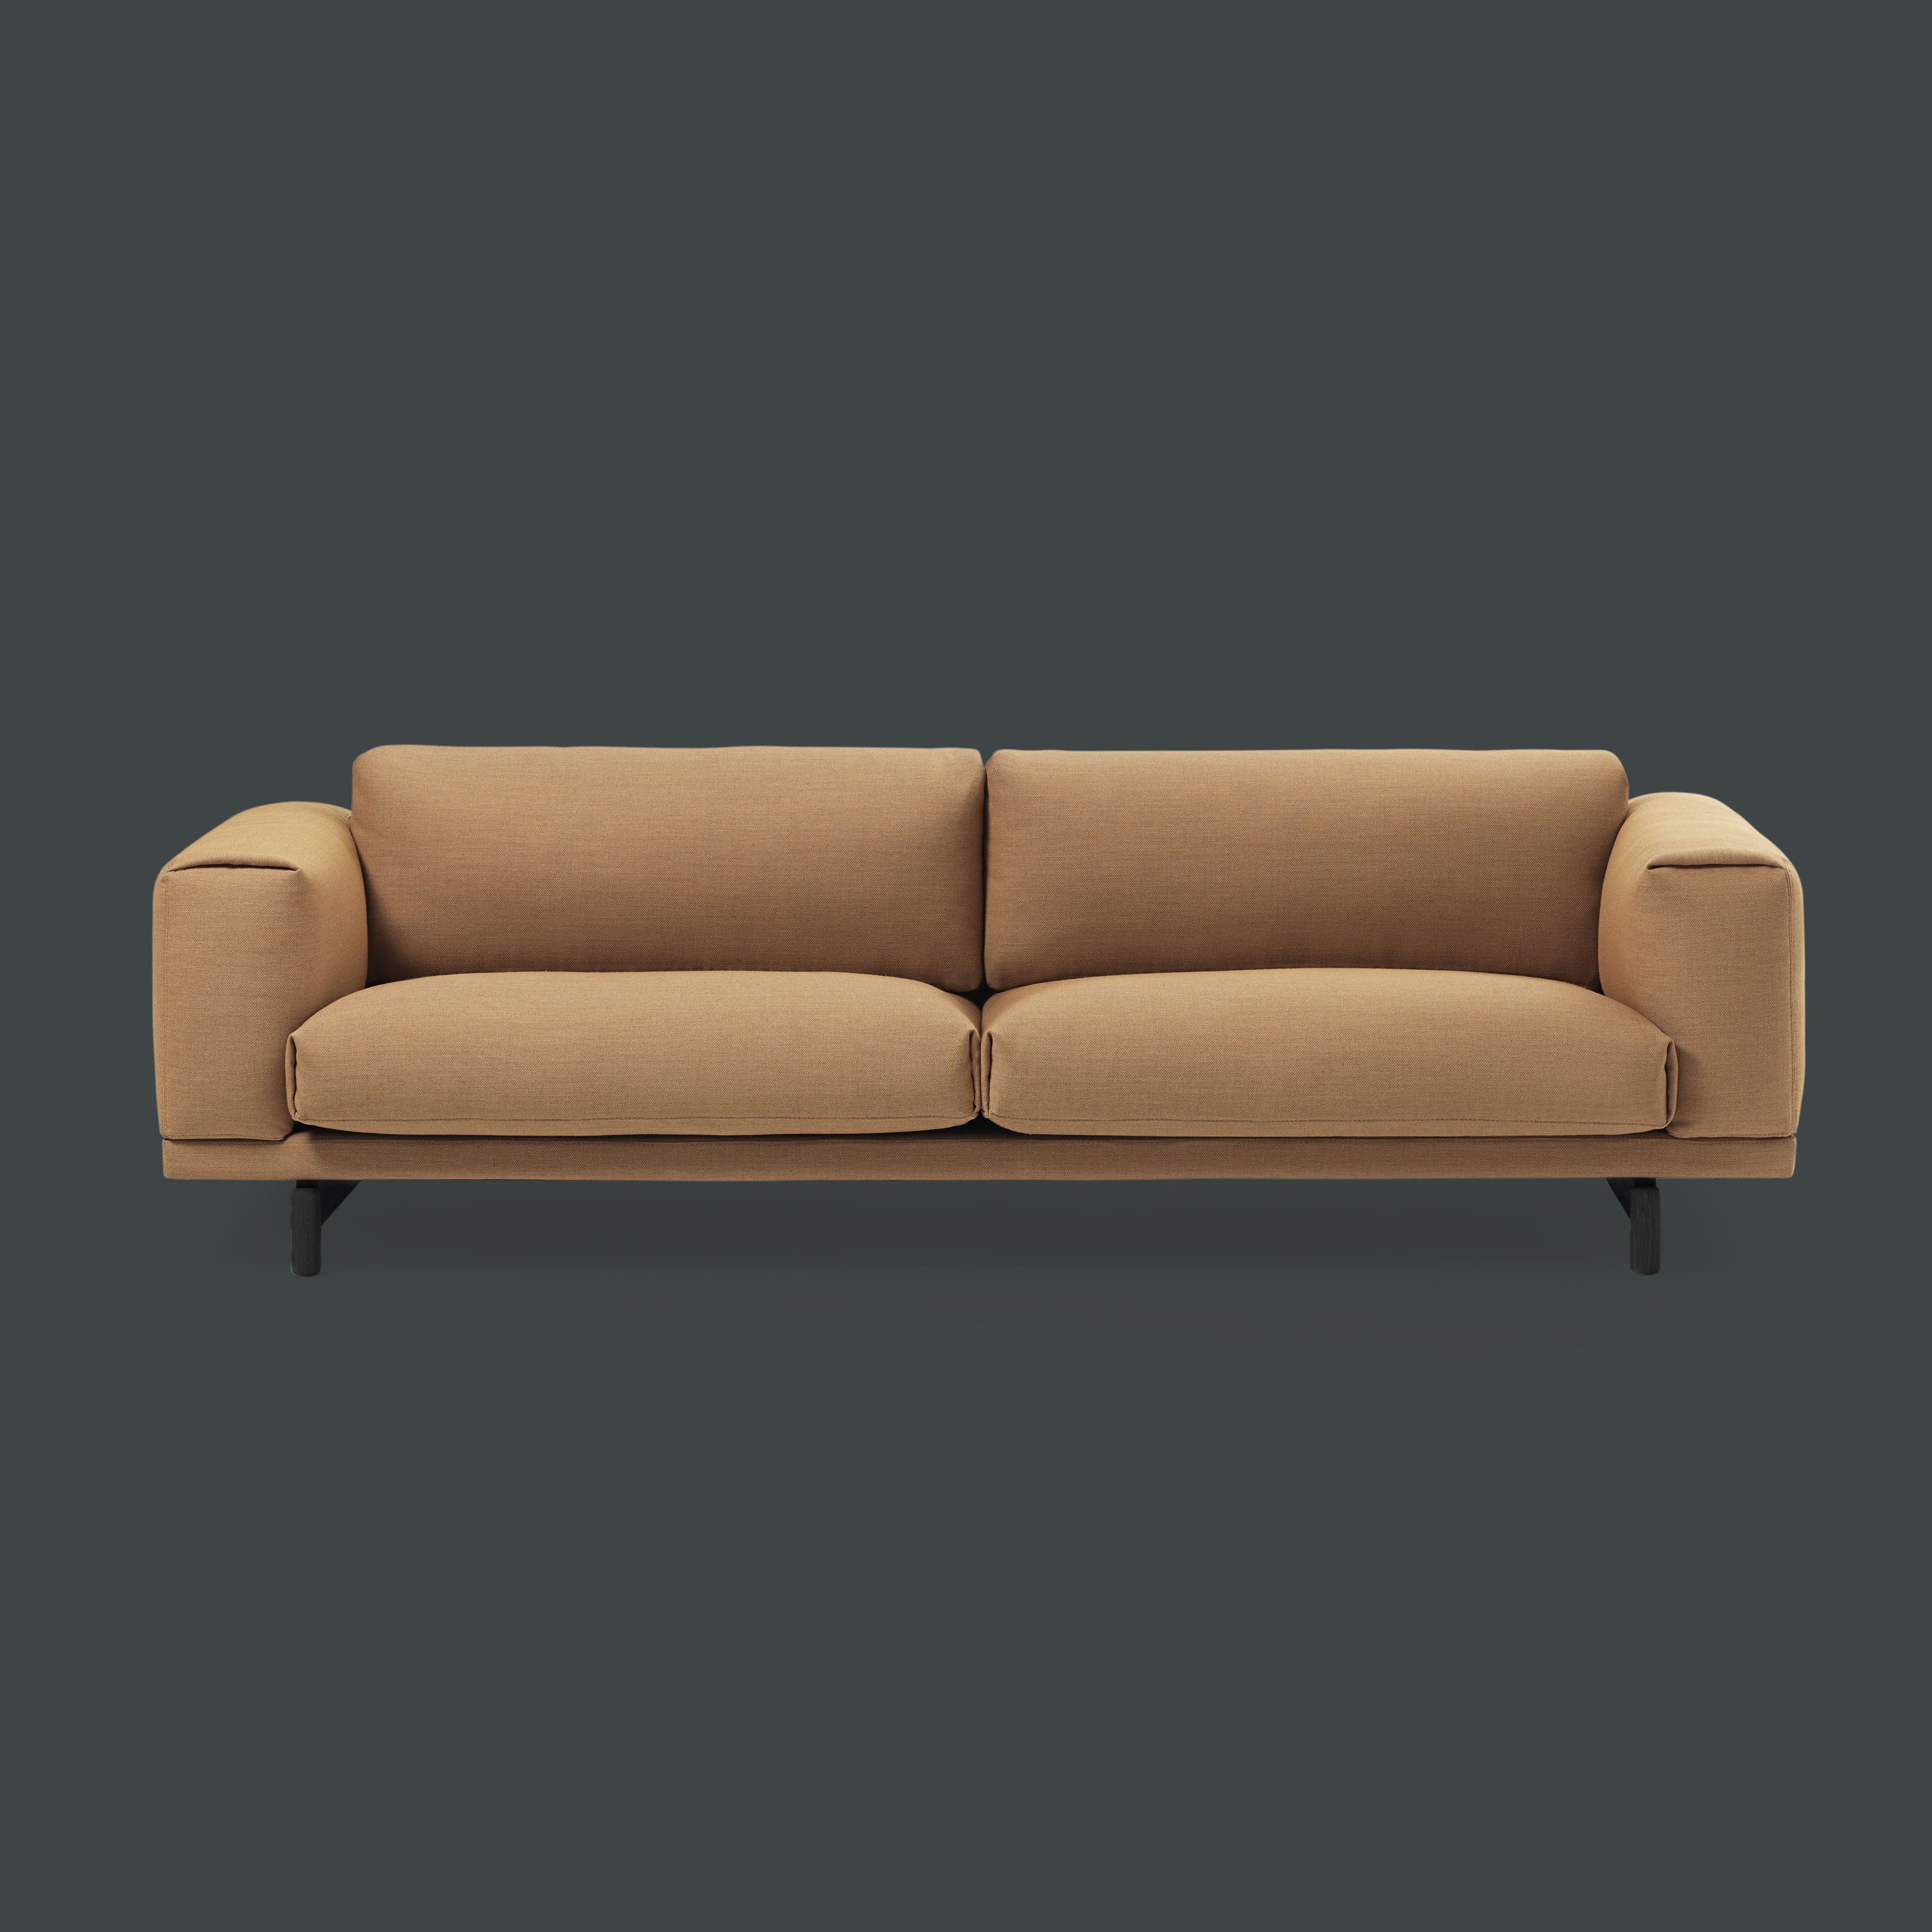 Rest Sofa: 3 Seater